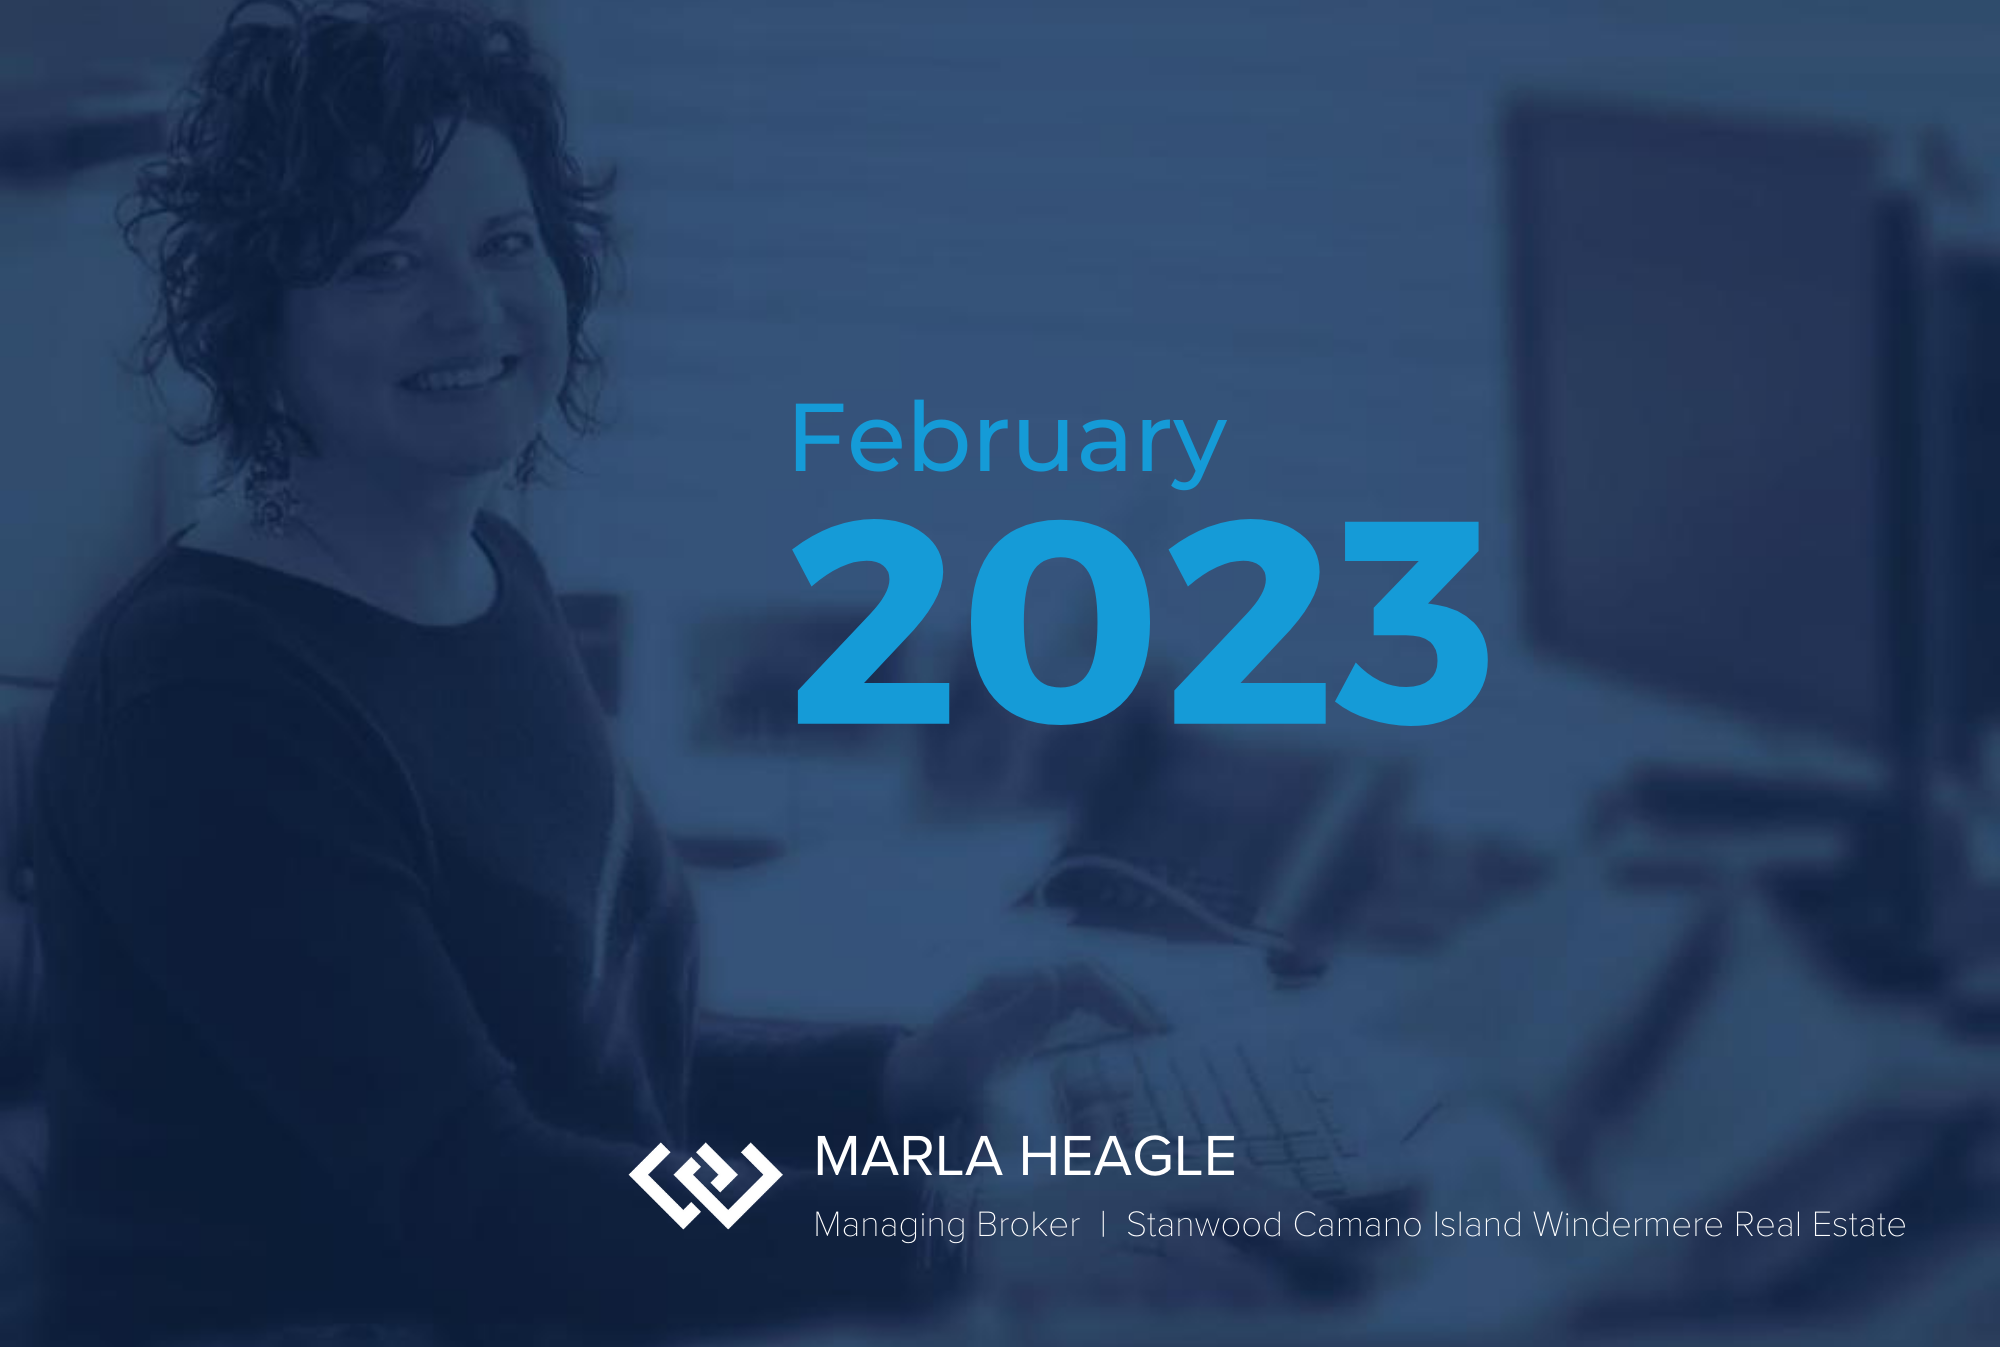 February 2023 blog insights